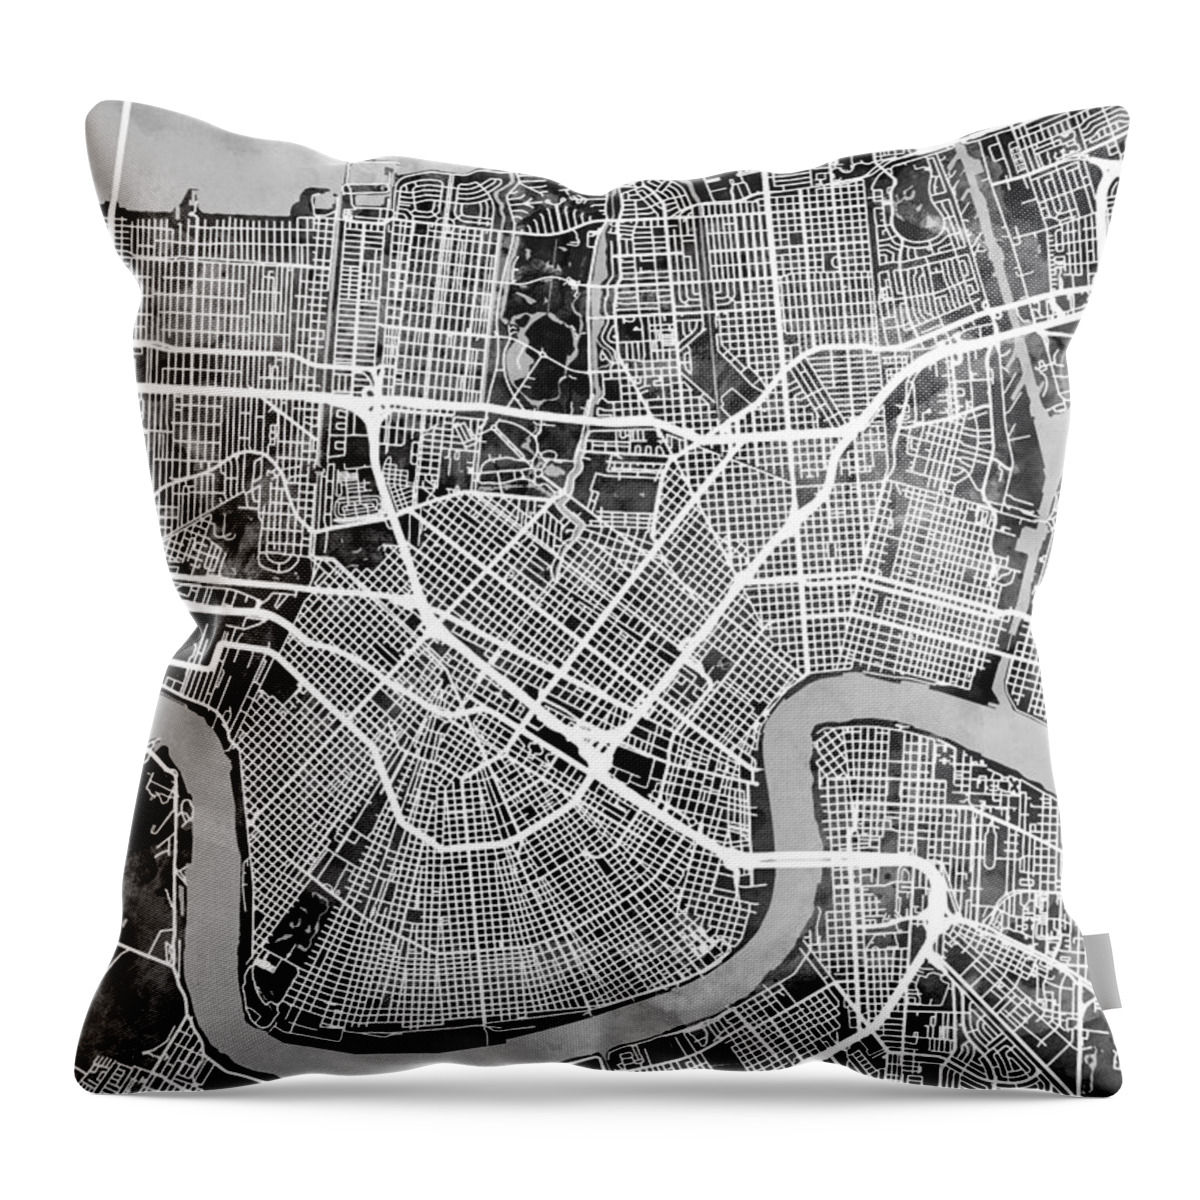 New Orelans Throw Pillow featuring the digital art New Orleans Street Map by Michael Tompsett